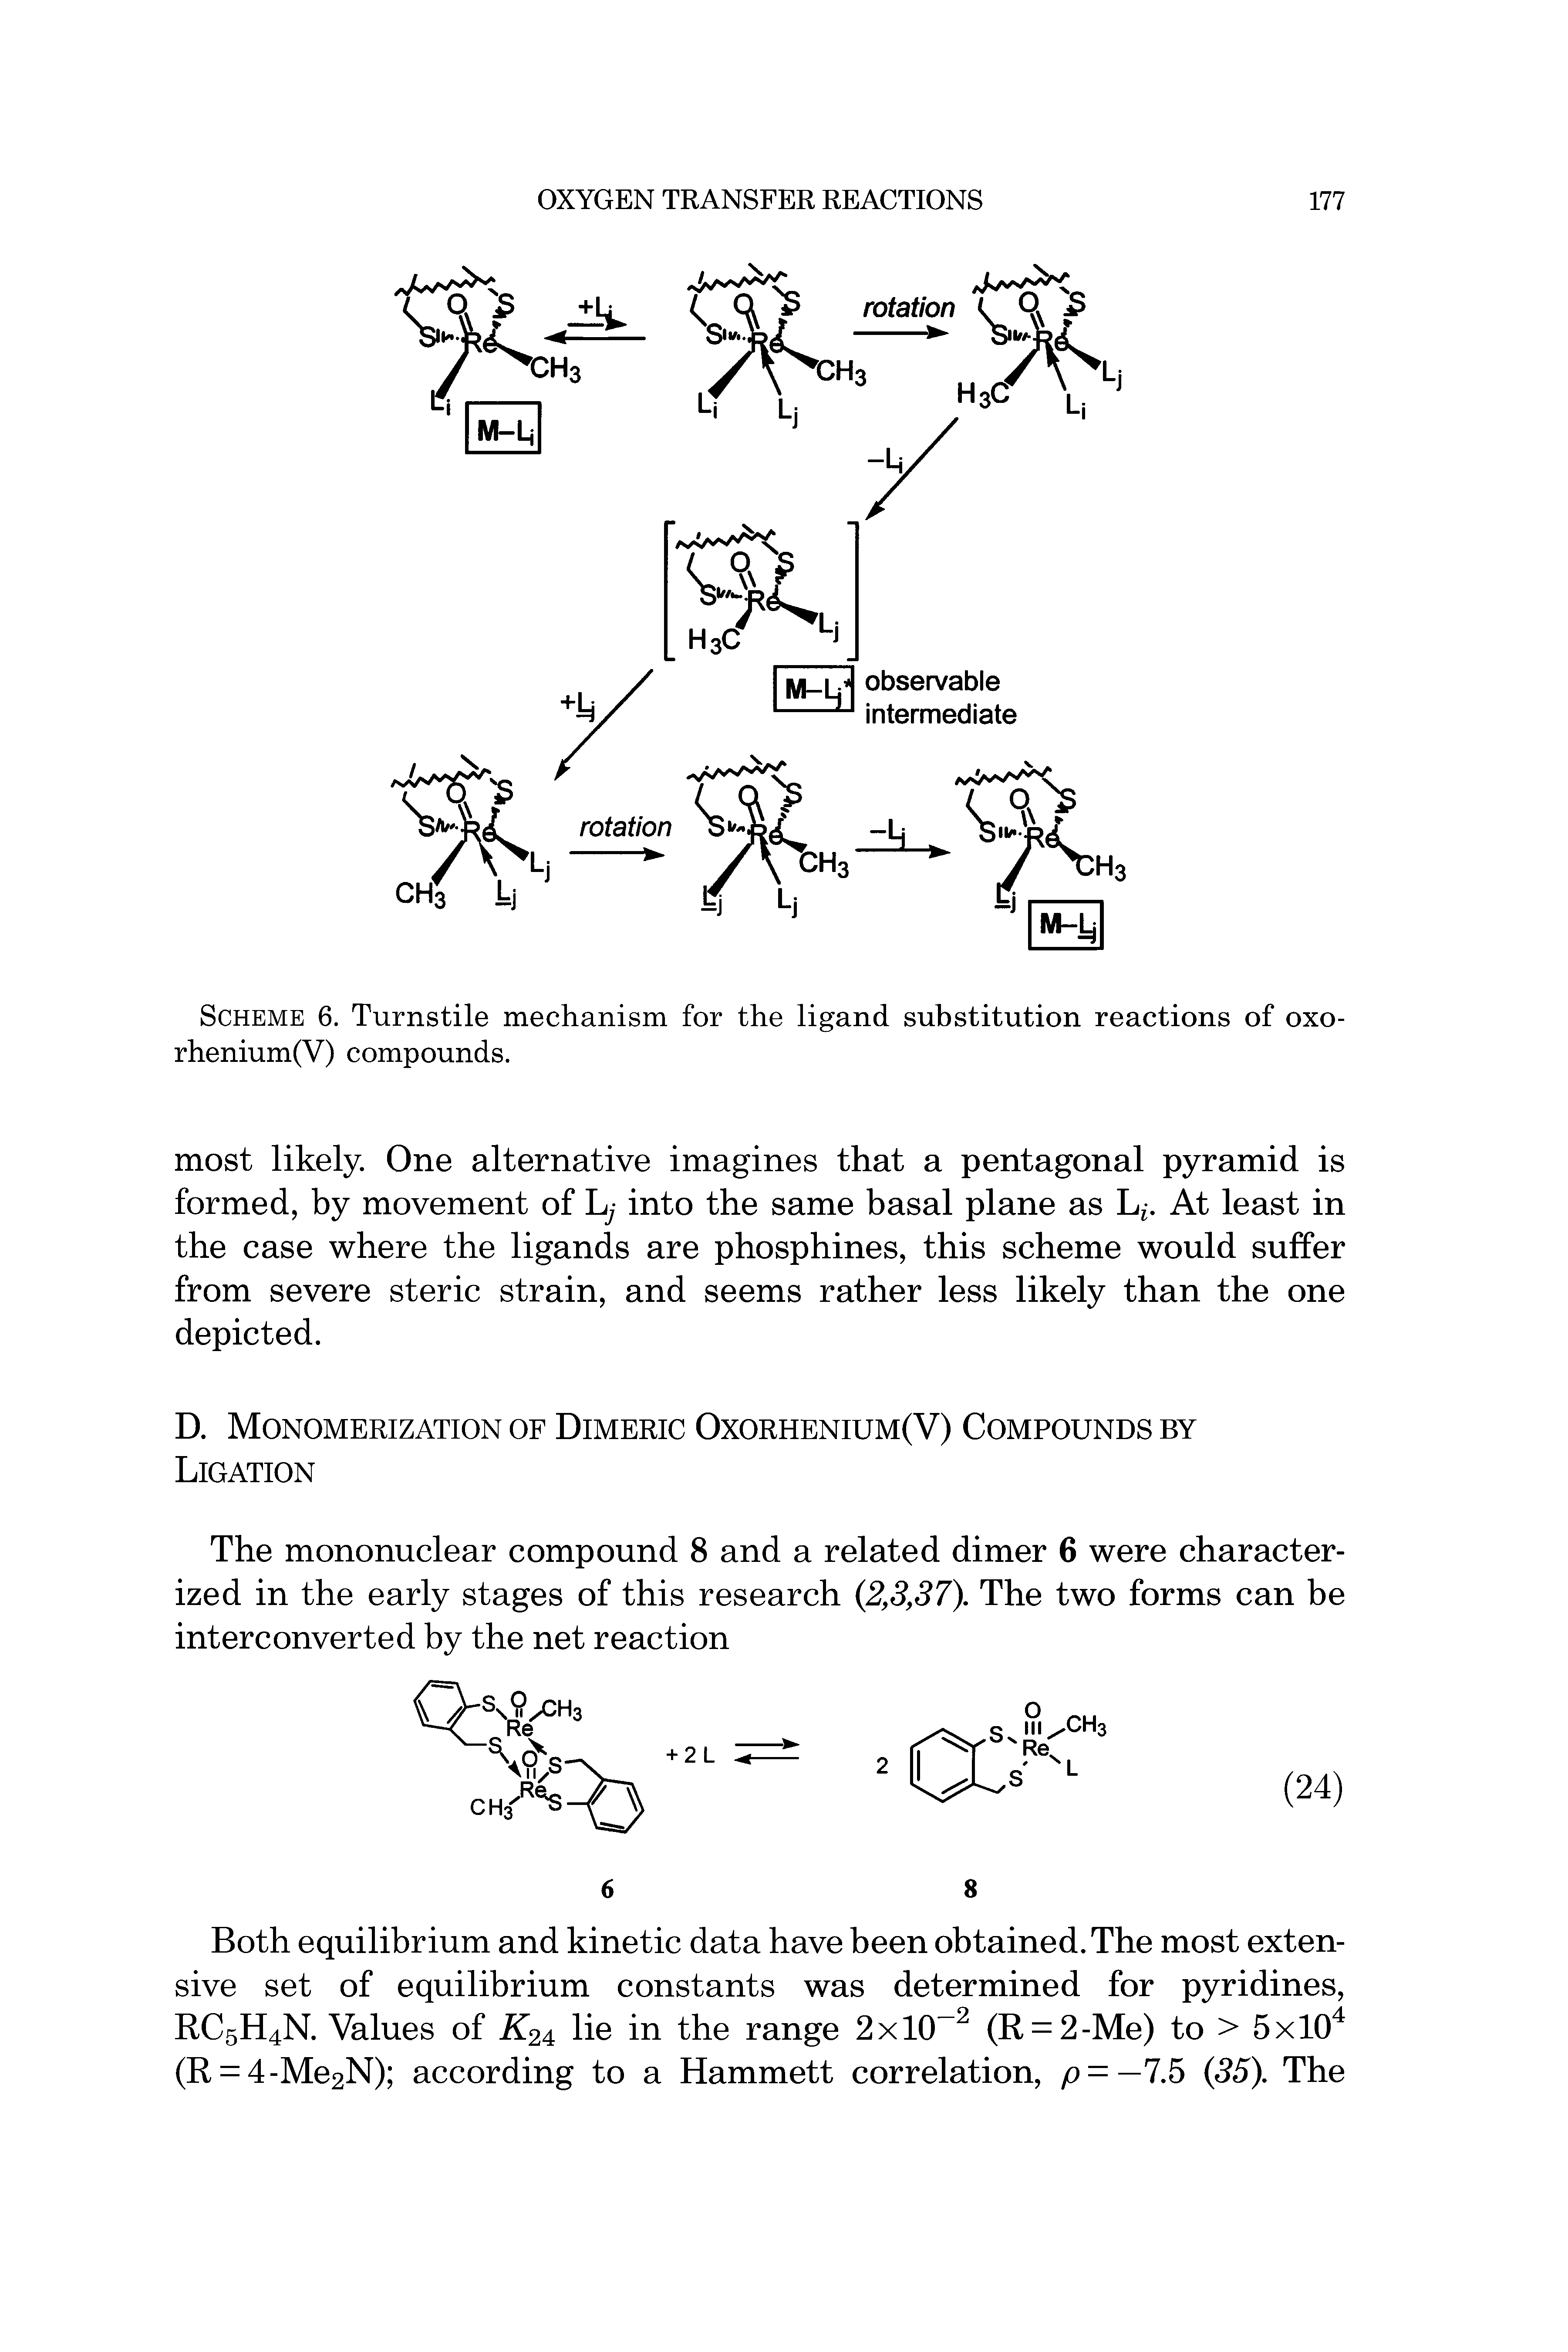 Scheme 6. Turnstile mechanism for the ligand substitution reactions of oxo-rhenium(V) compounds.